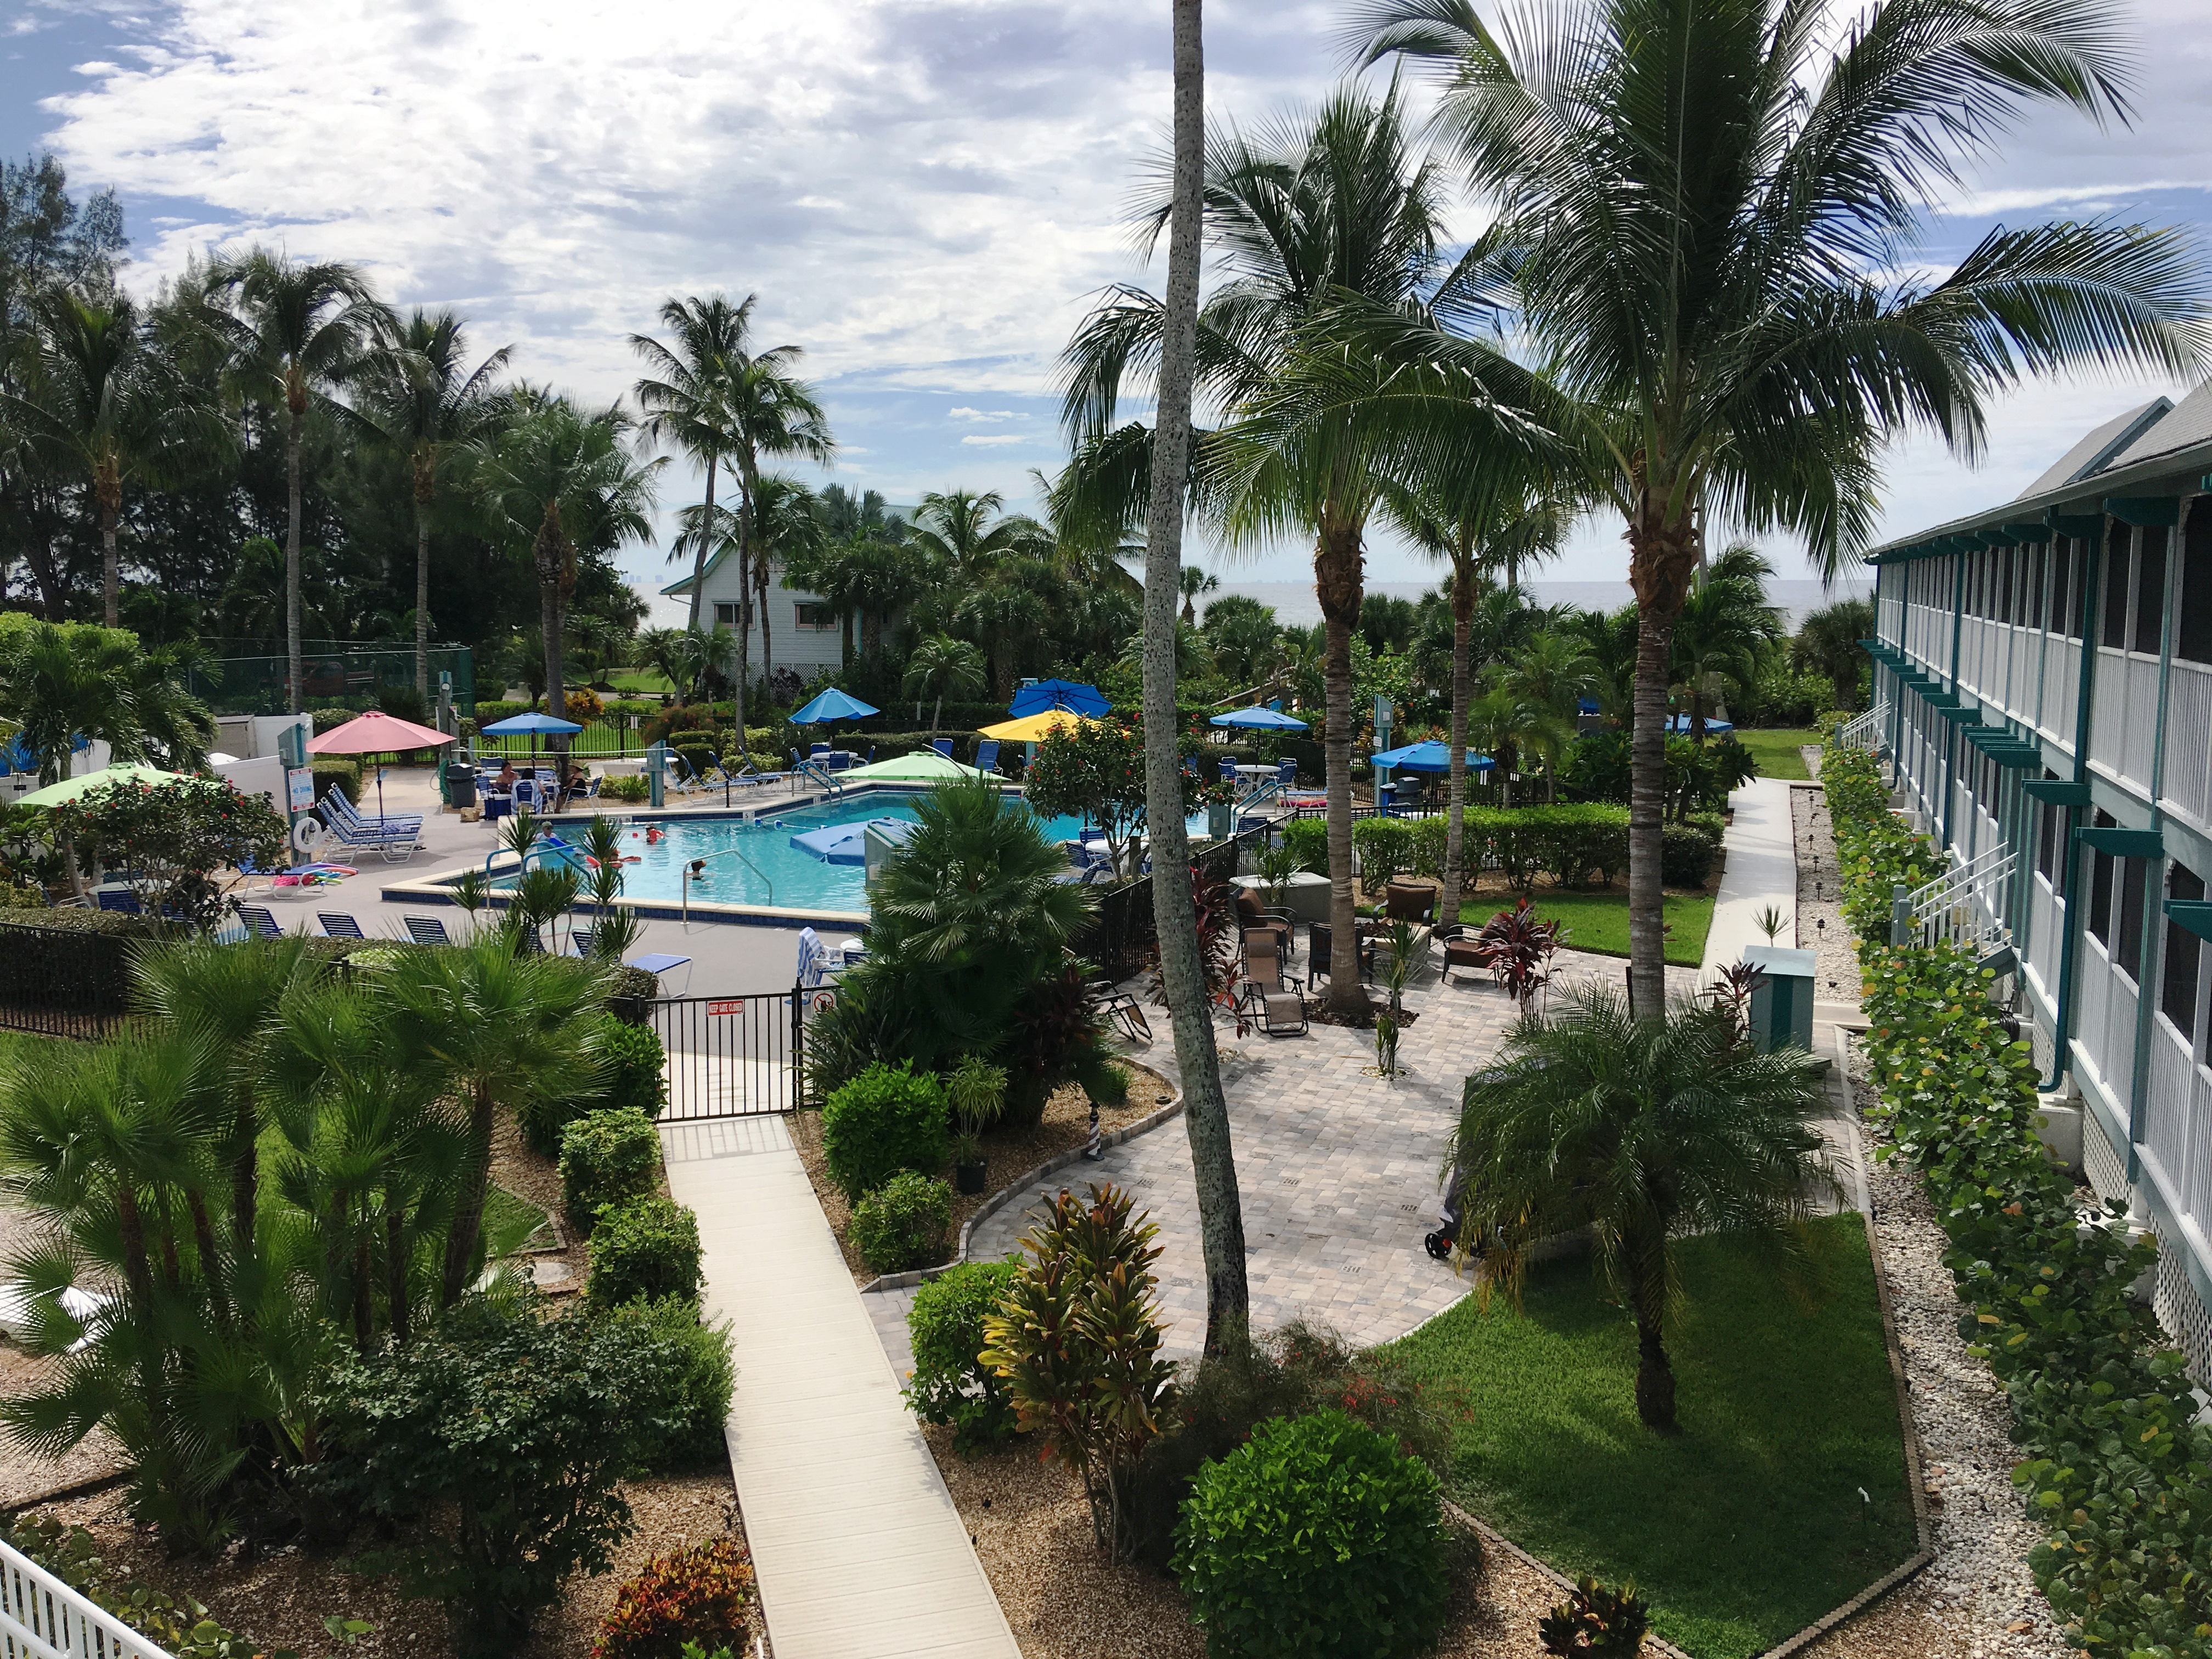 Surfrider Beach Club, Sanibel Island, Florida - Vacation Club Loans